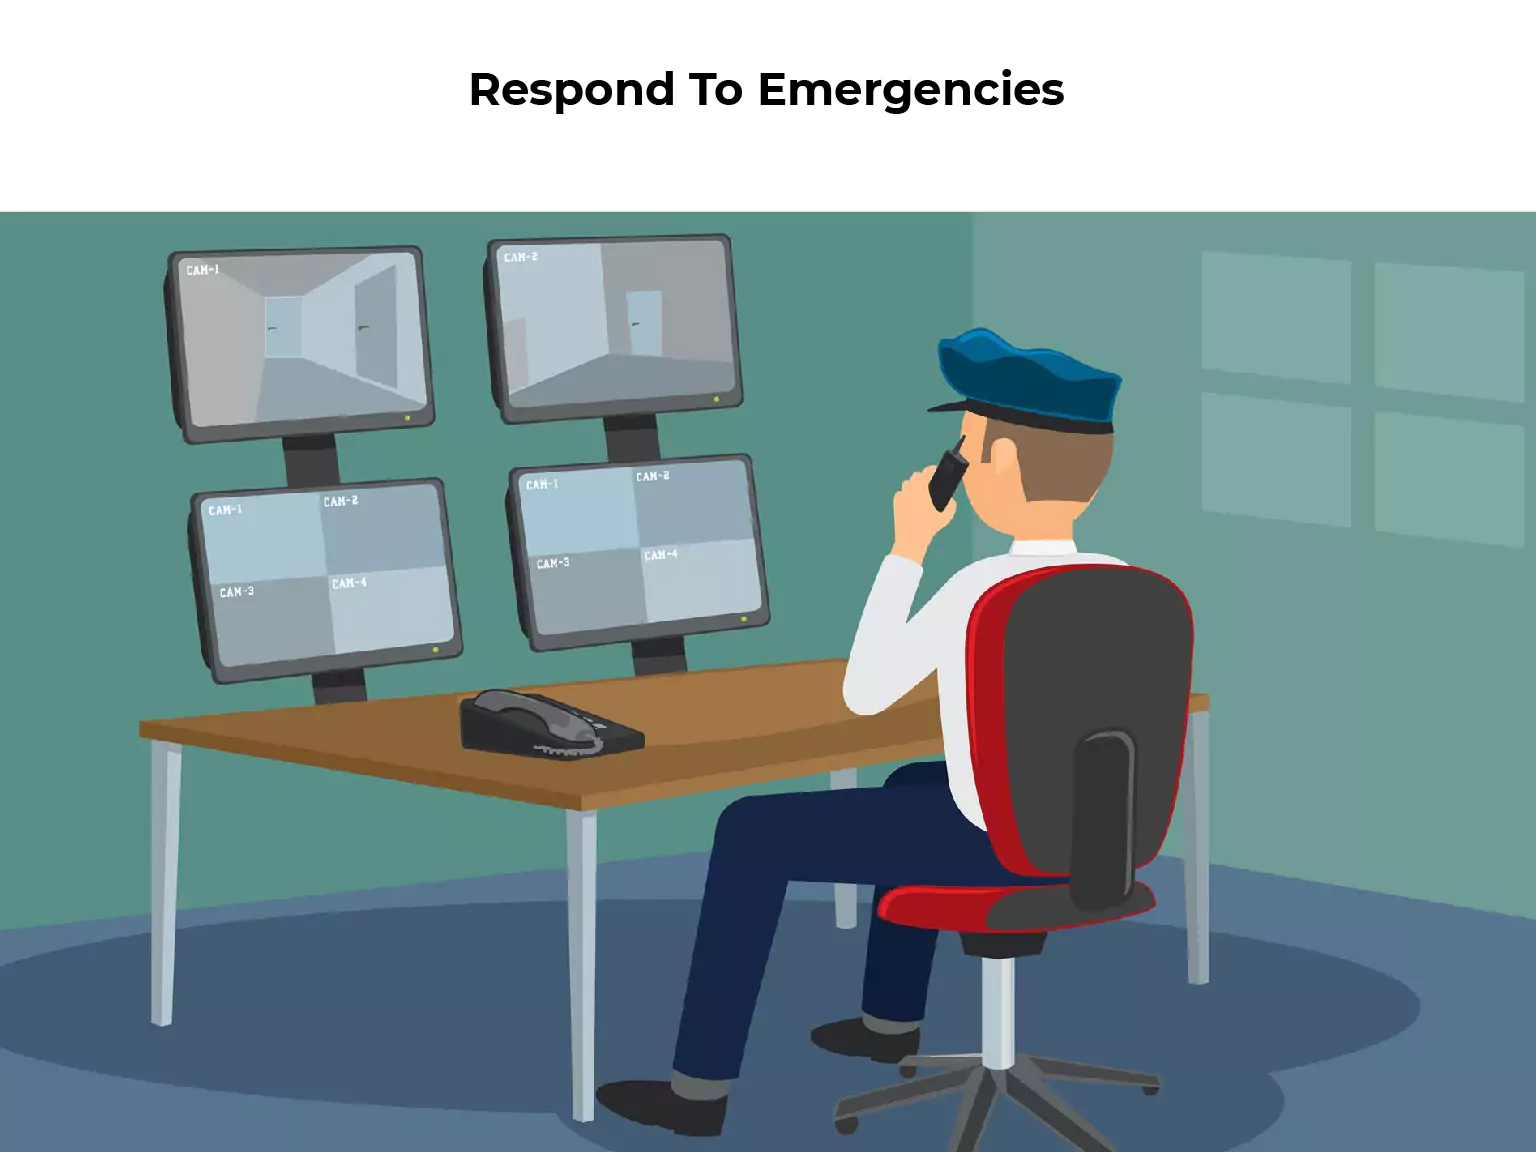 Respond to emergencies